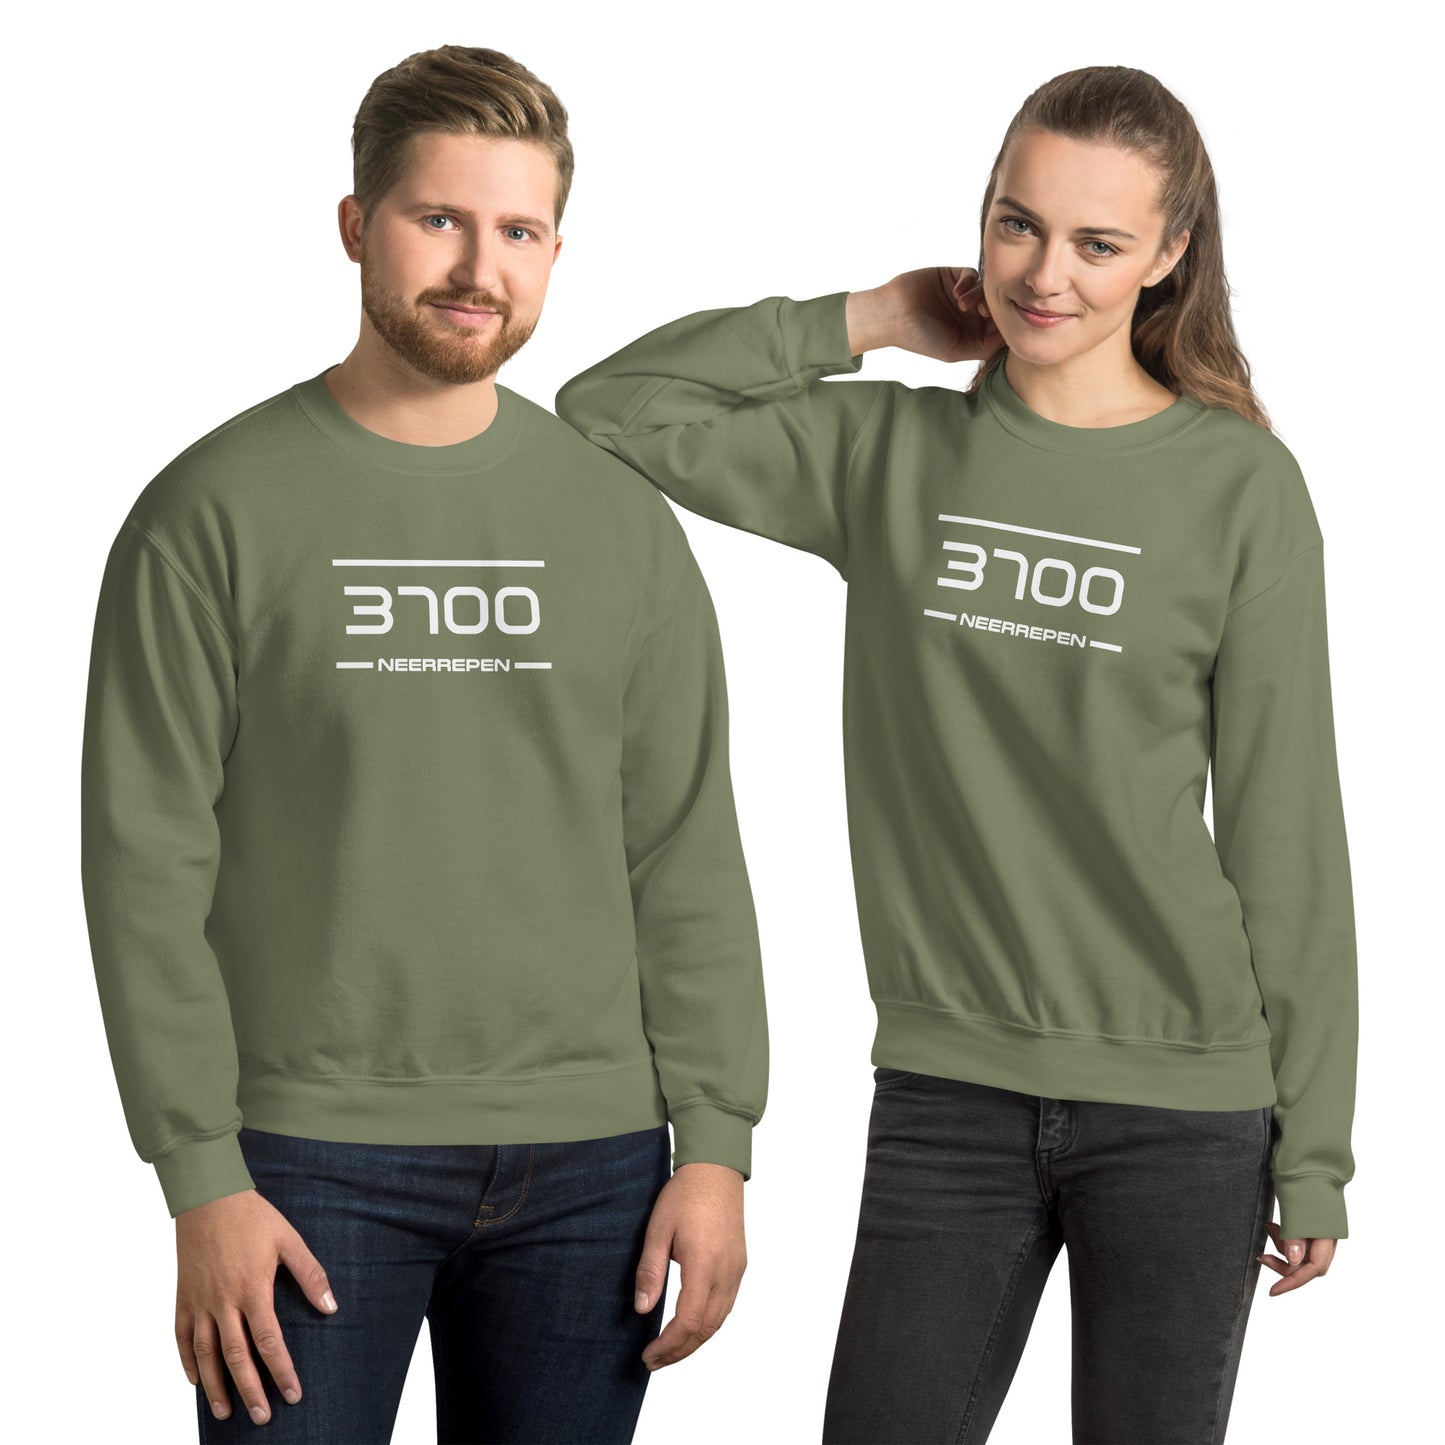 Sweater - 3700 - Neerrepen (M/V)